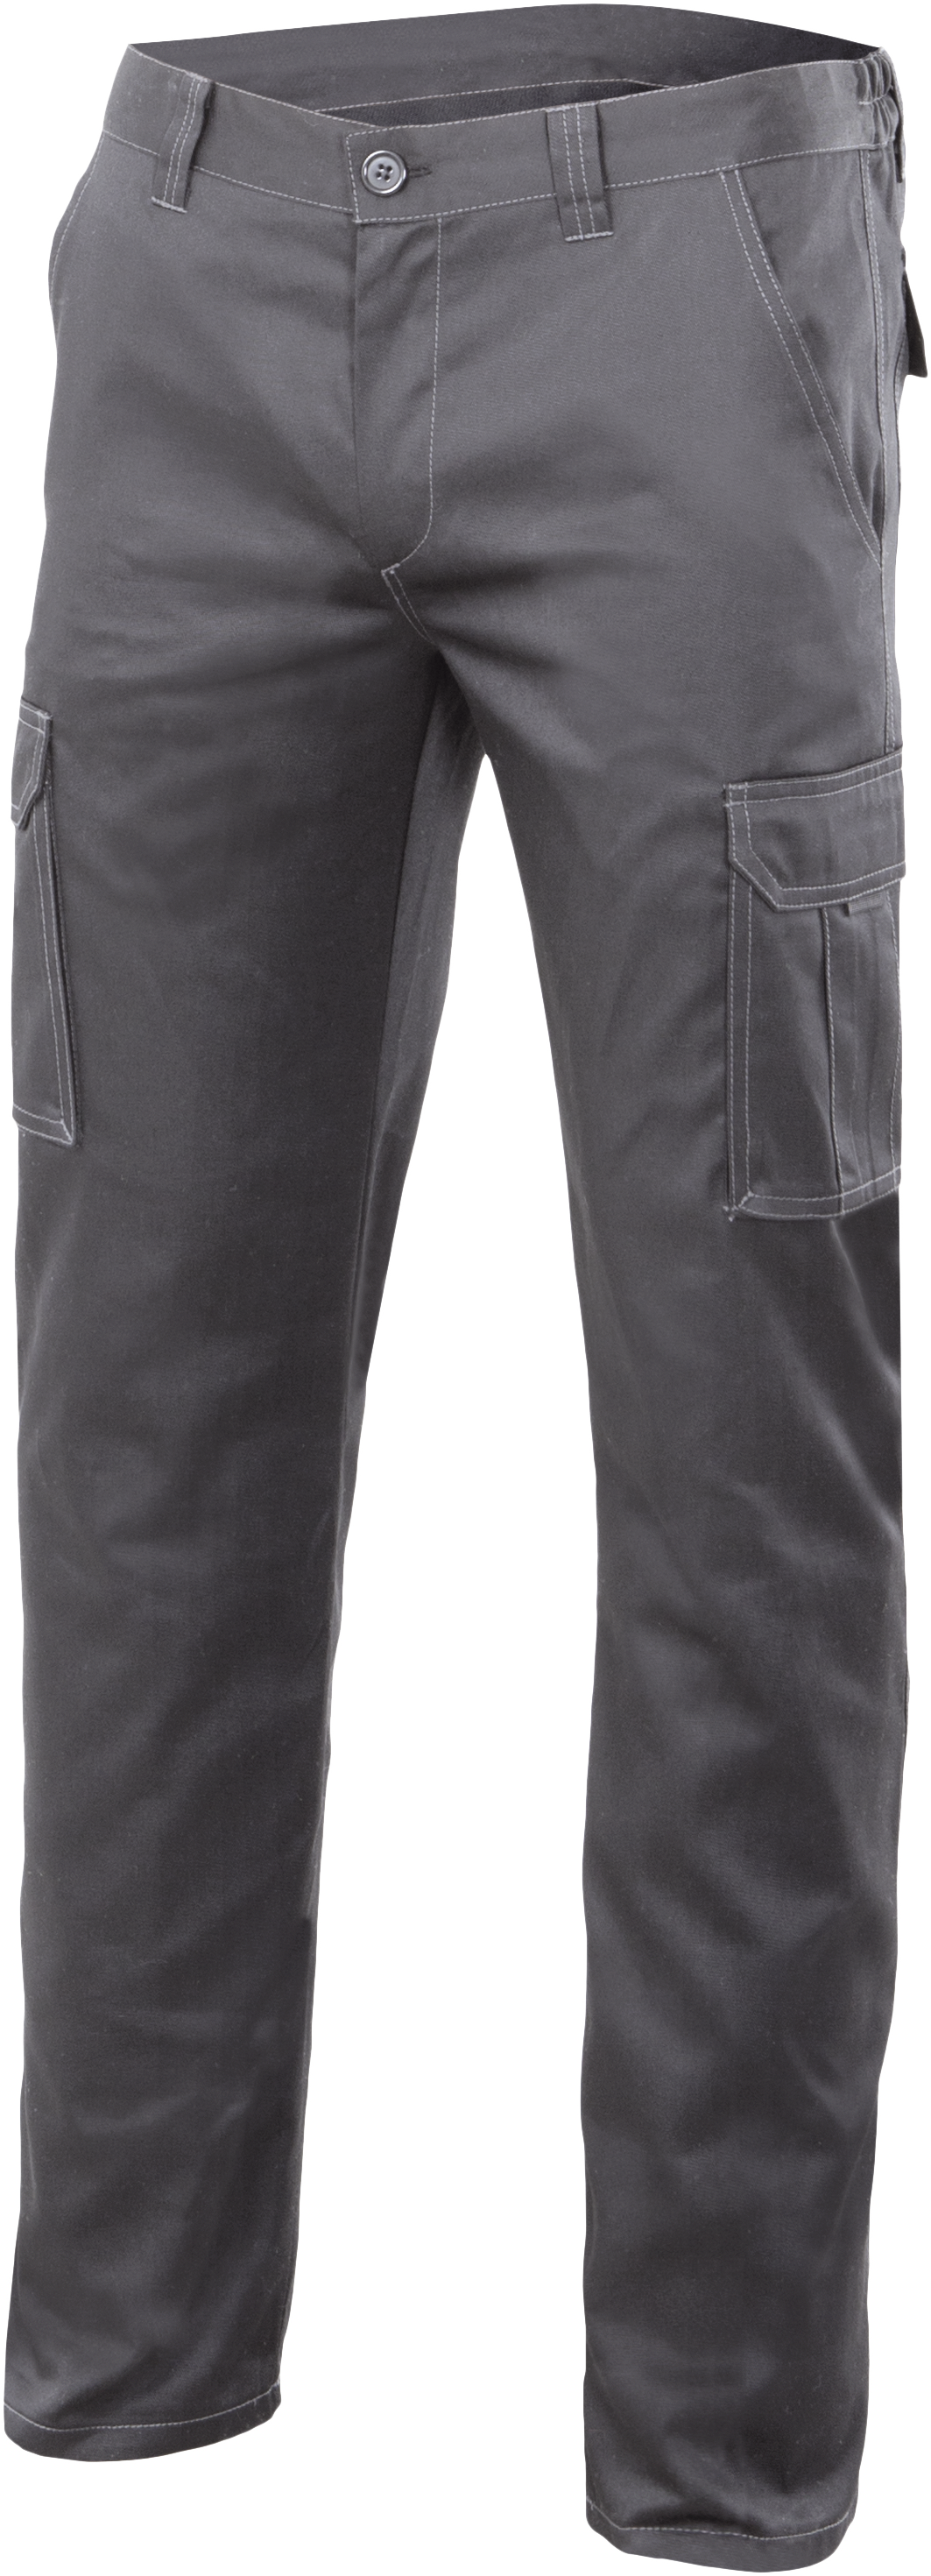 Pantalon gris 103002S TM | Leroy